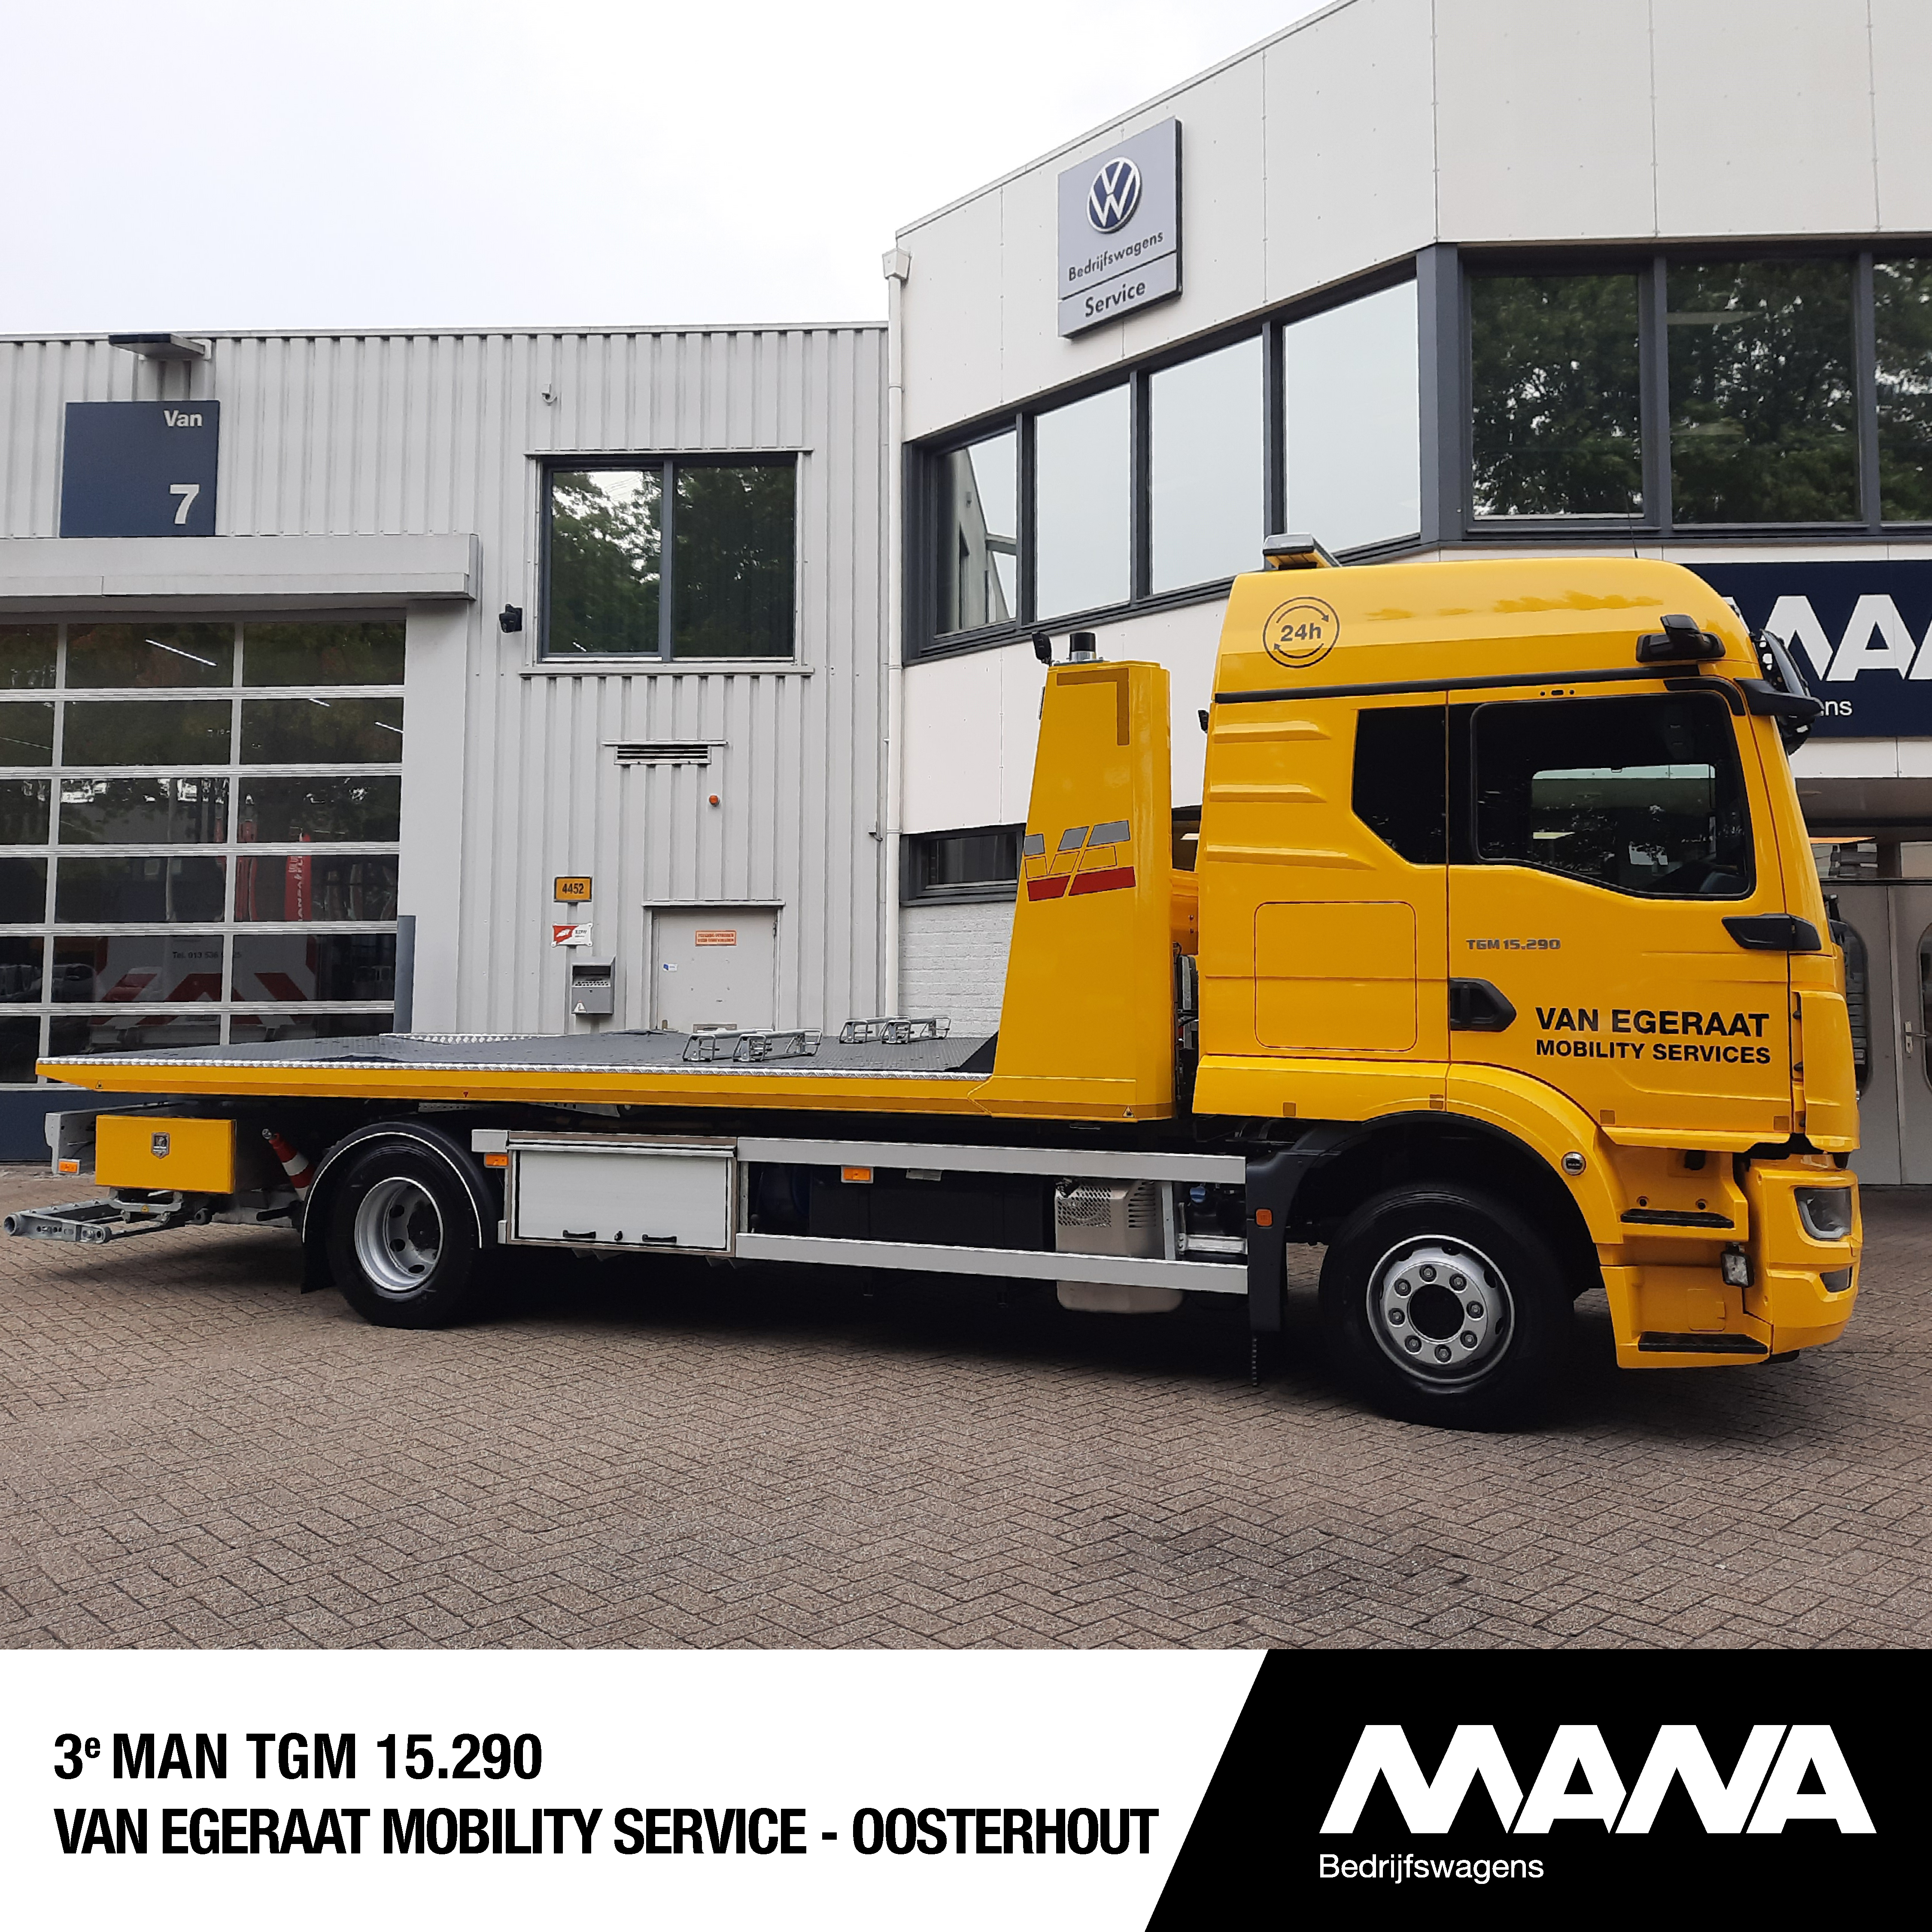 3e MAN TGM 15.290 Van Egeraat Mobility Service - Oosterhout